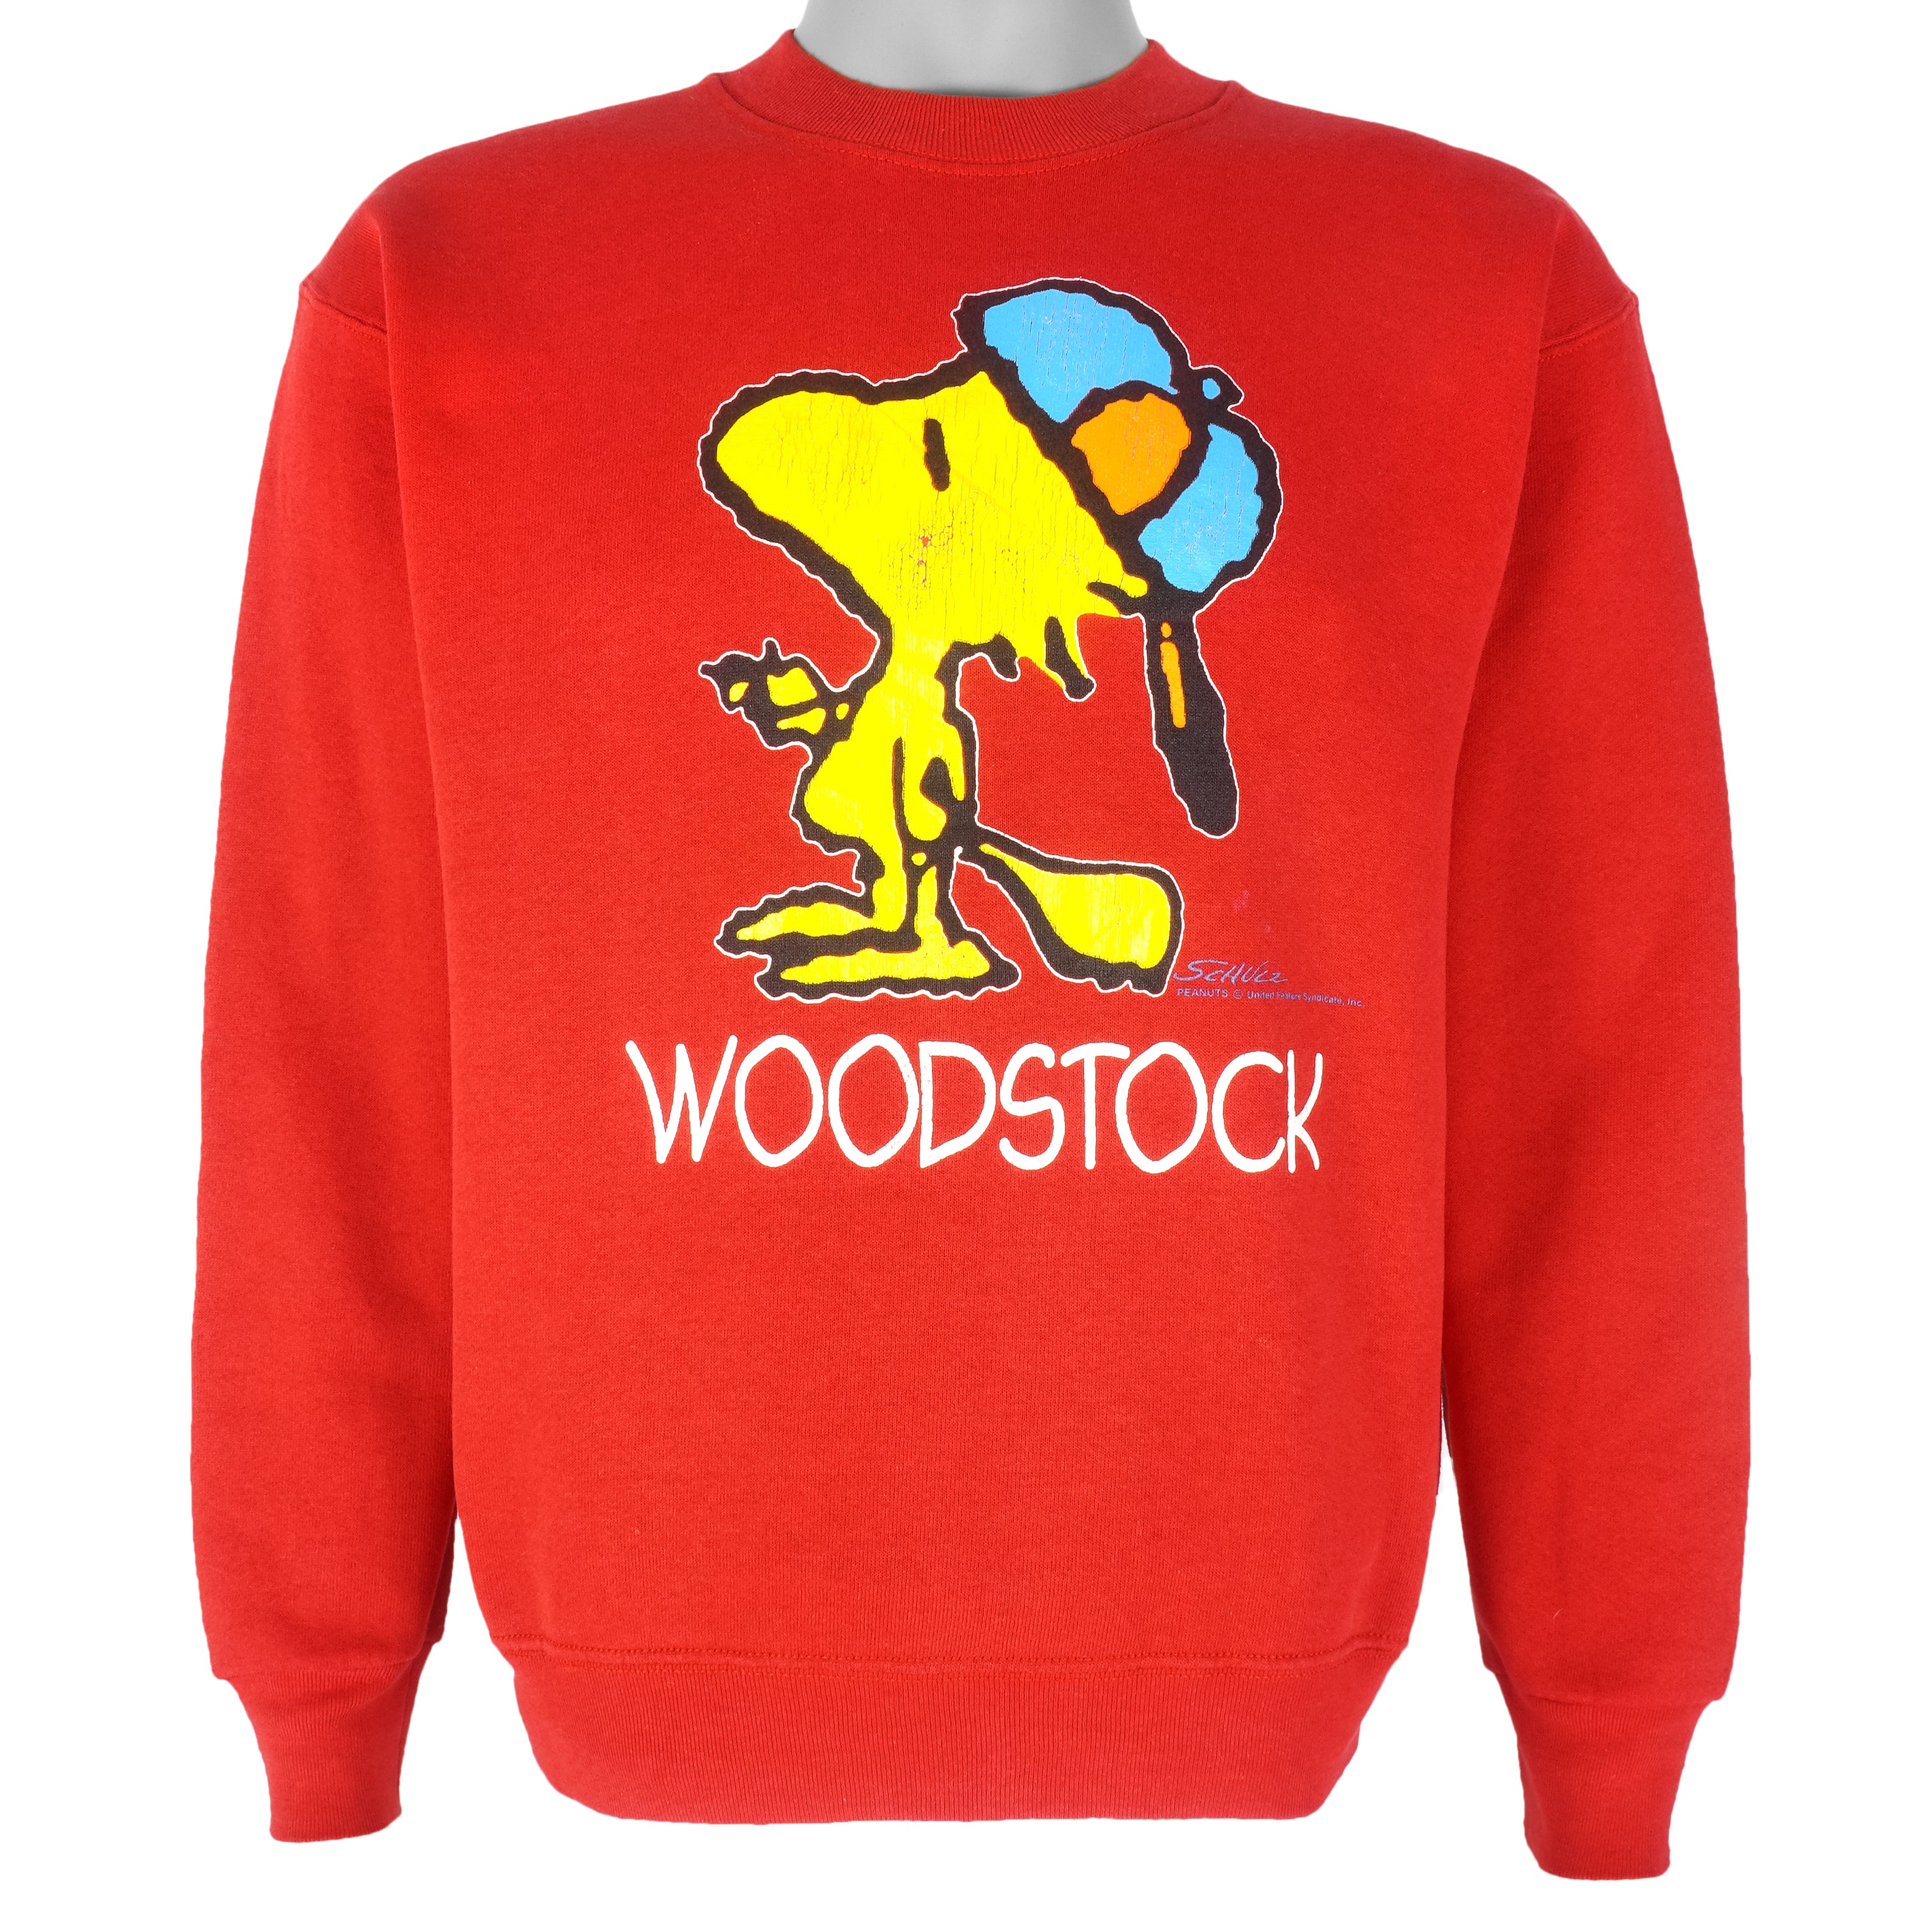 Vintage Snoopy Sport Sweatshirt Crewneck Made in Mexico Grey Good Condition  Pullover Jumper Size M 